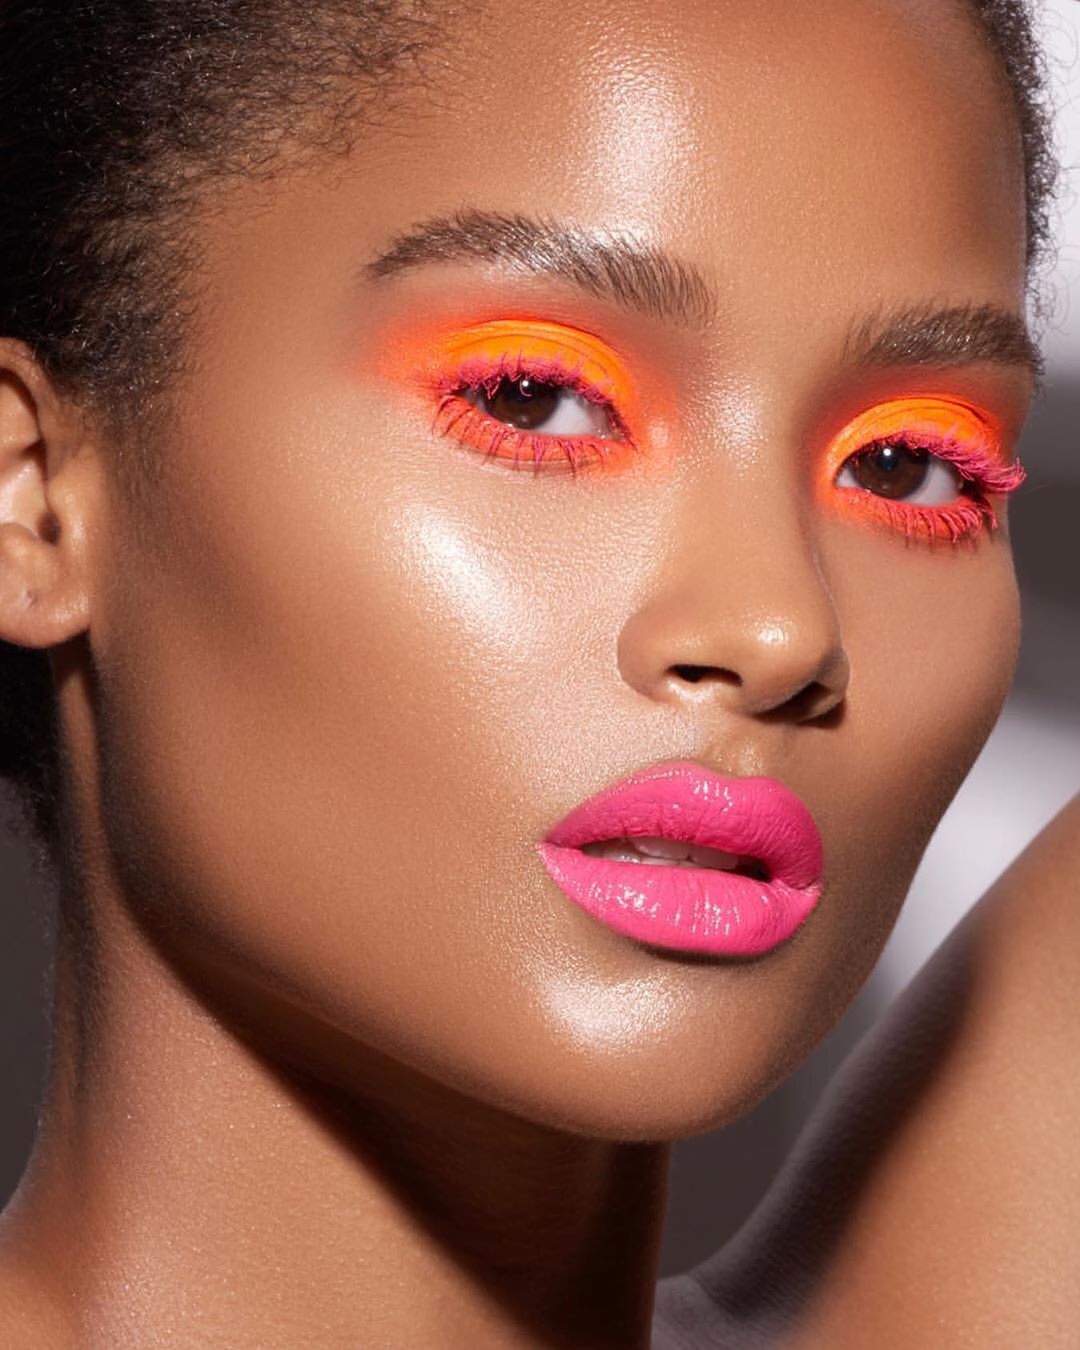 neon-makeup-orange-eye-and-pink-lip-style-rave